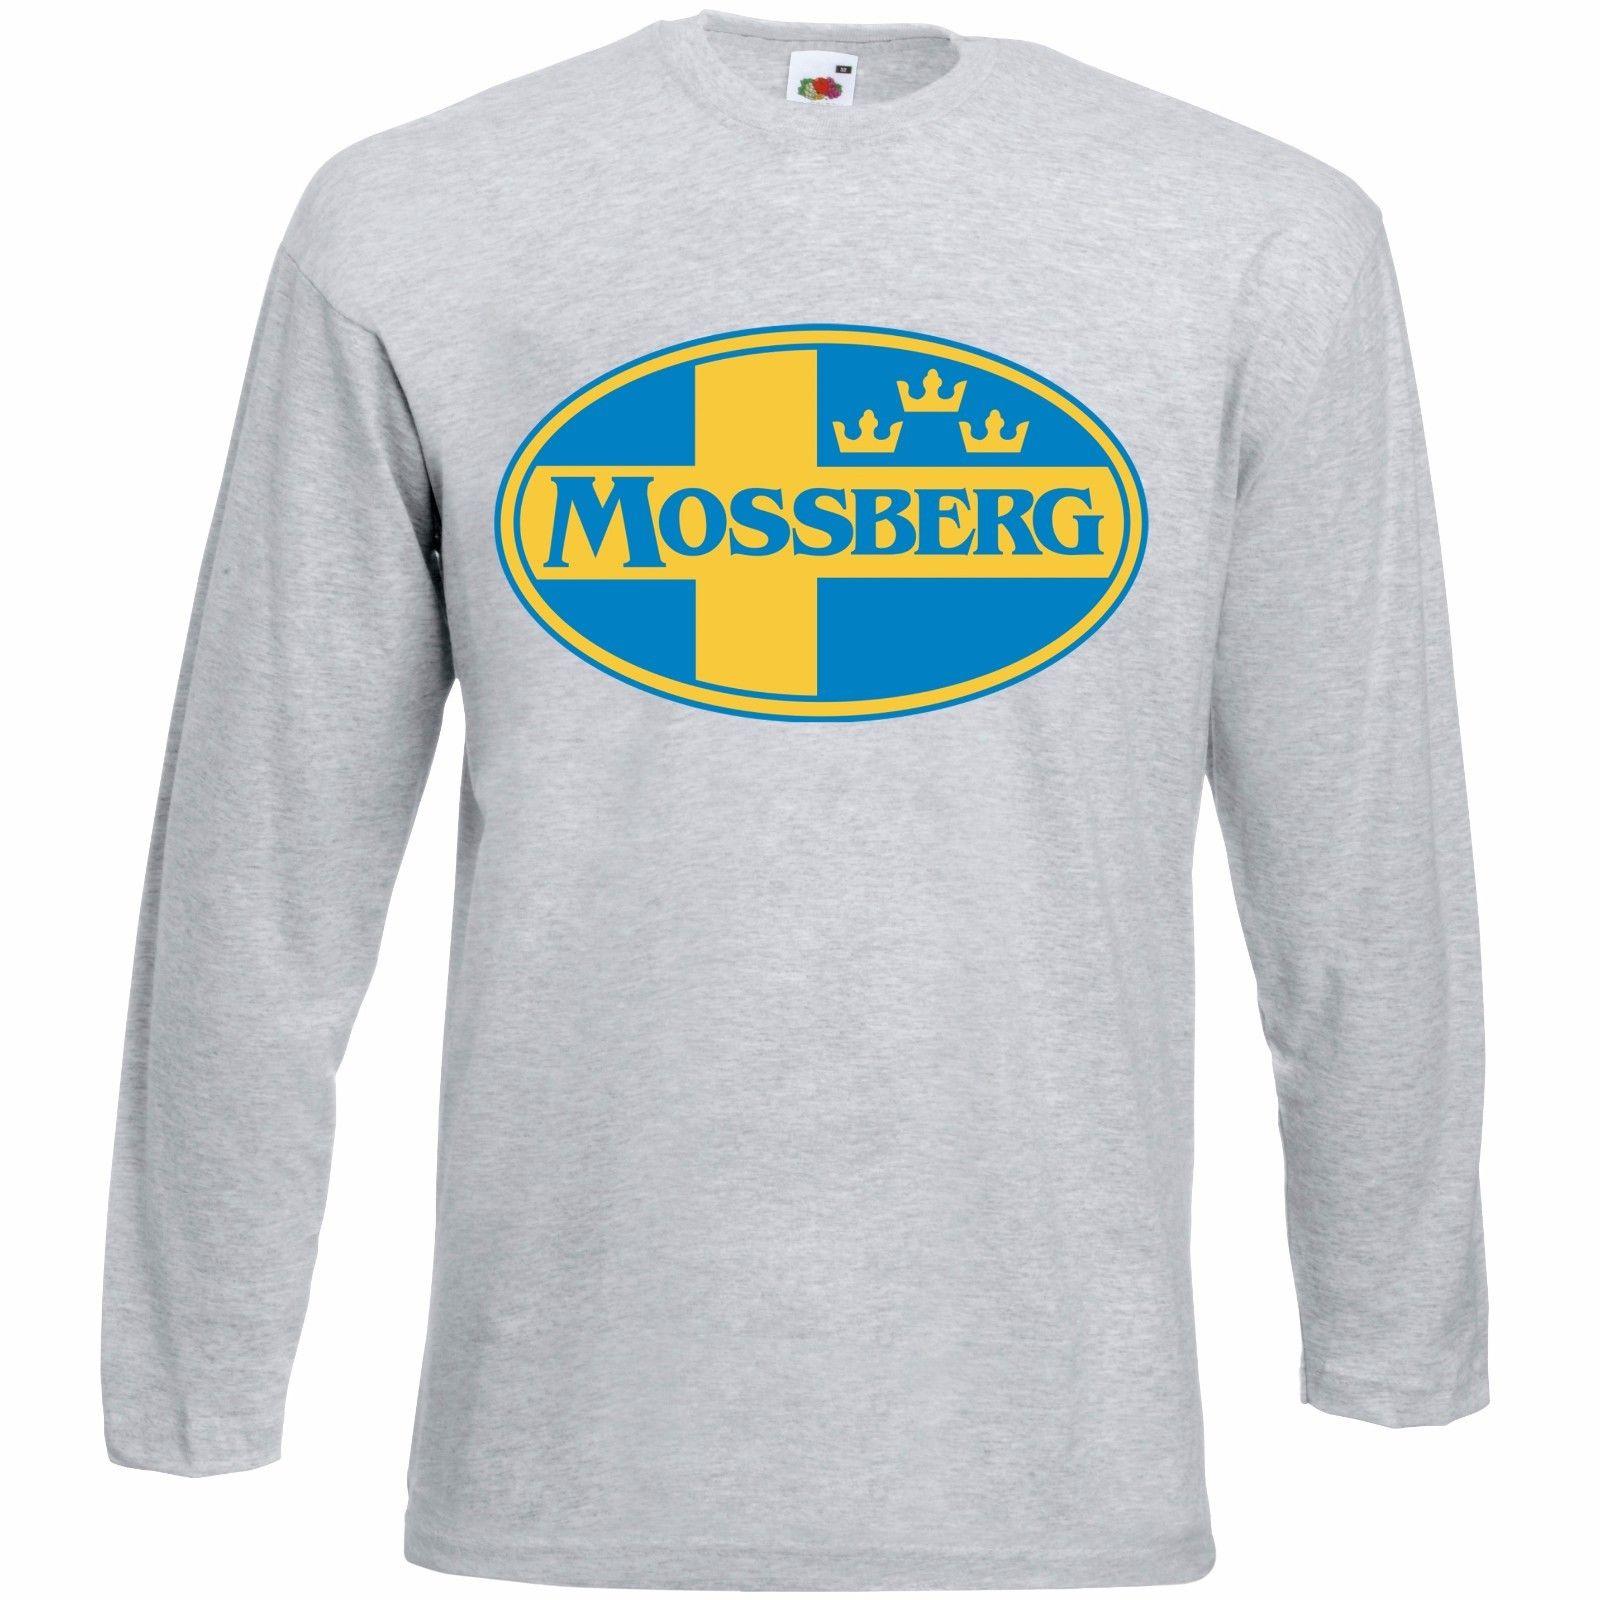 Mossberg Logo - Mossberg LOGO Fruit Of The Loom T Shirt Long Sleeve Online Shopping ...